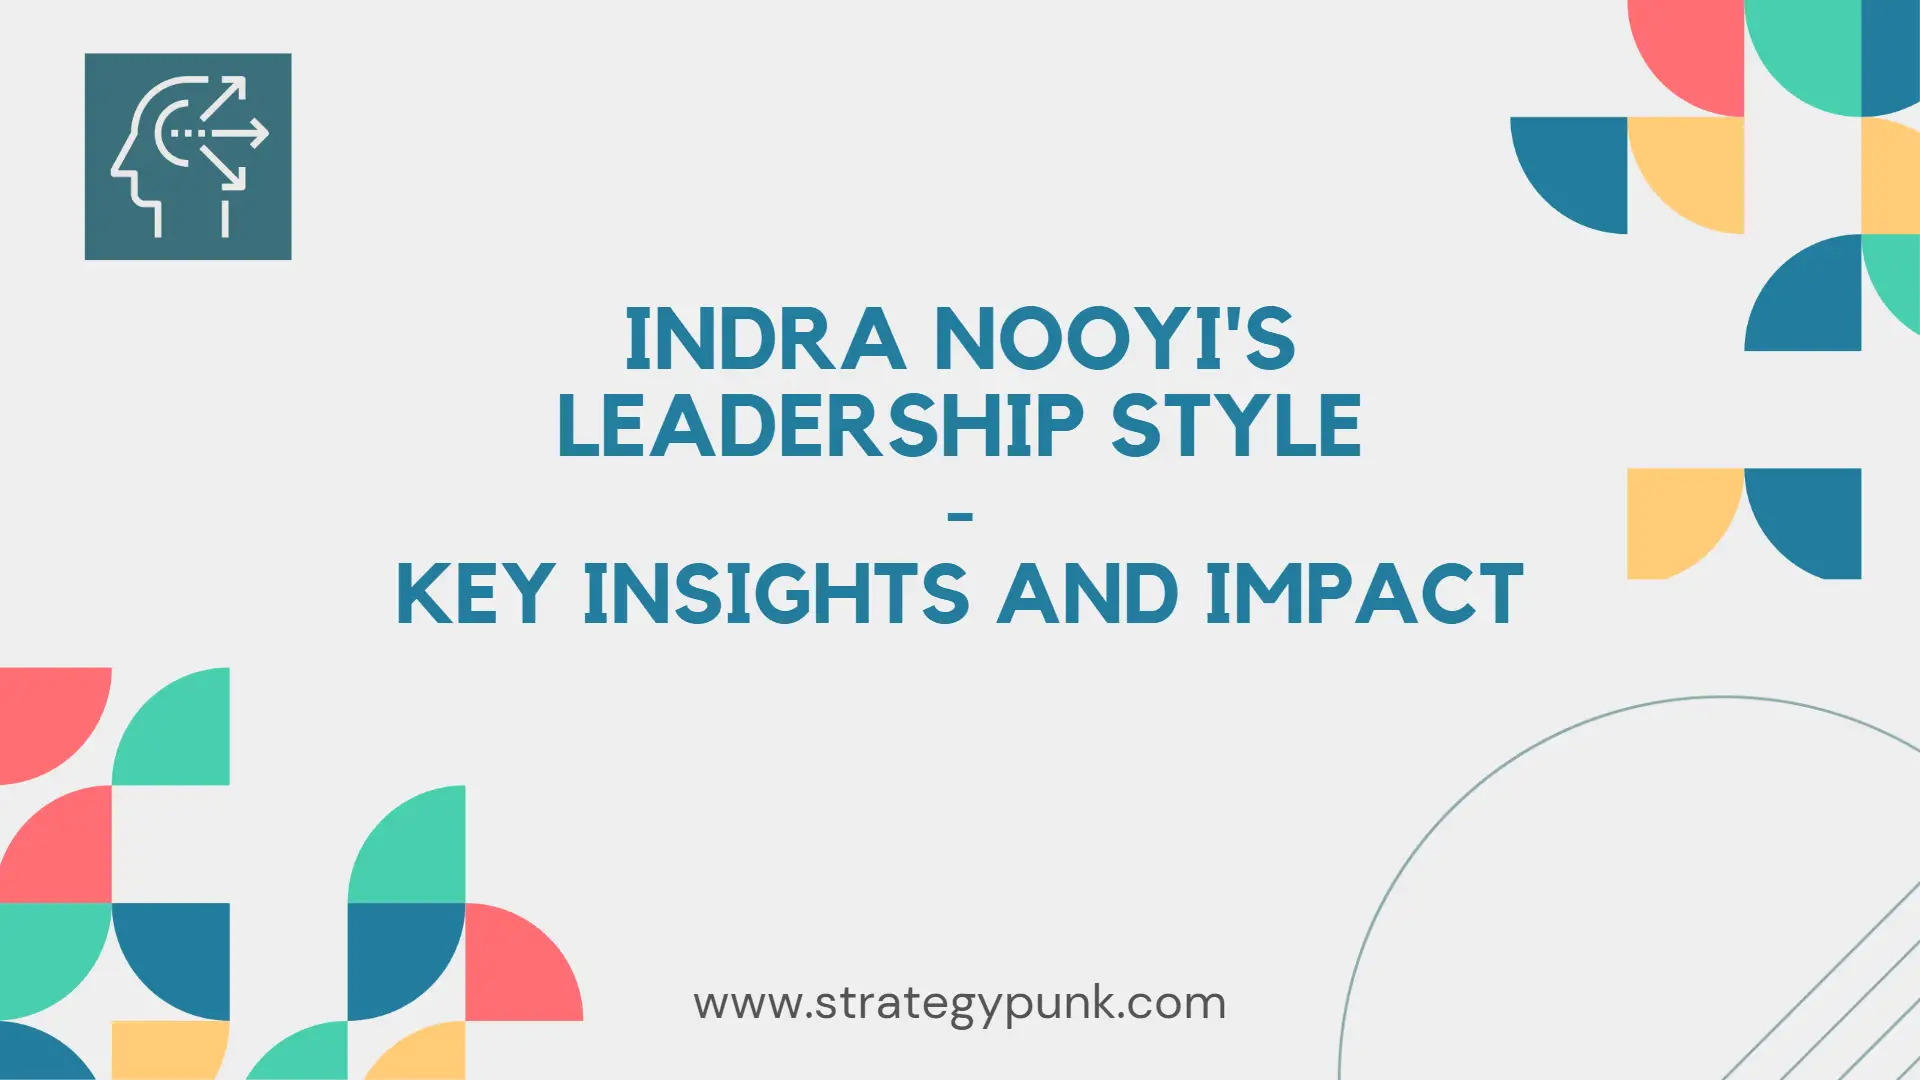 Indra Nooyi's Leadership Style: Key Insights and Impact